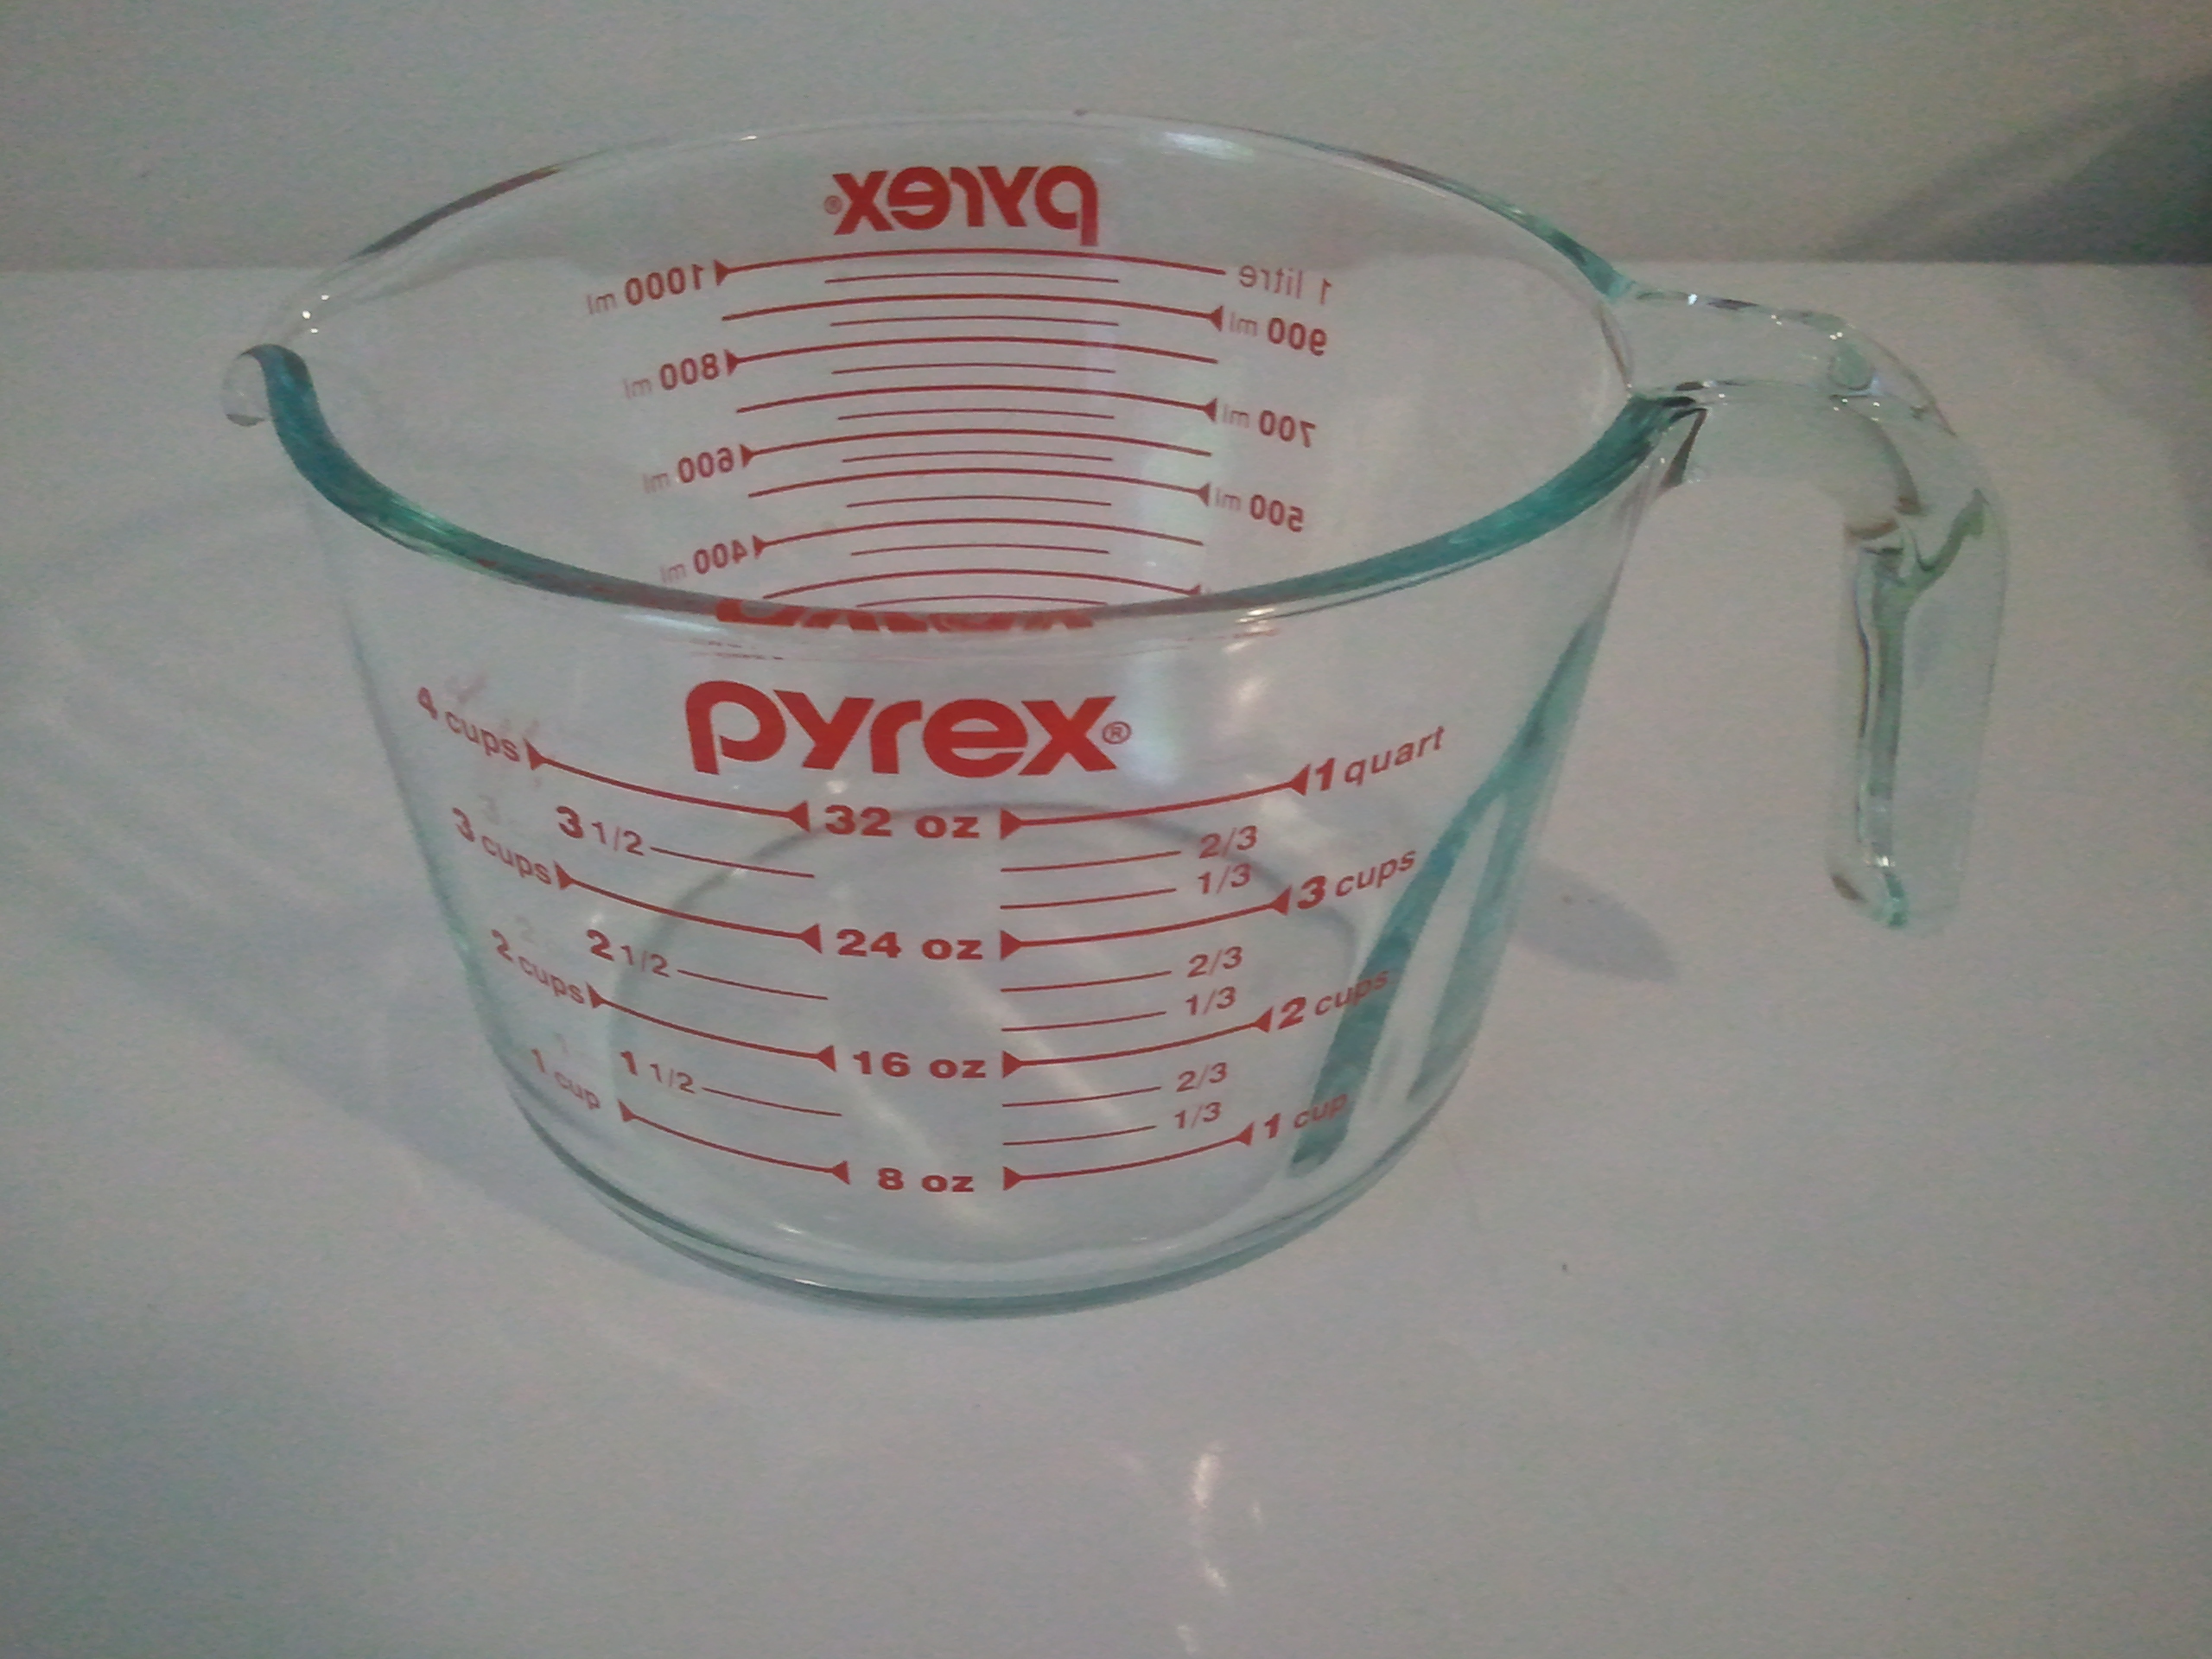 Pyrex Measuring Cup, 1 Cup